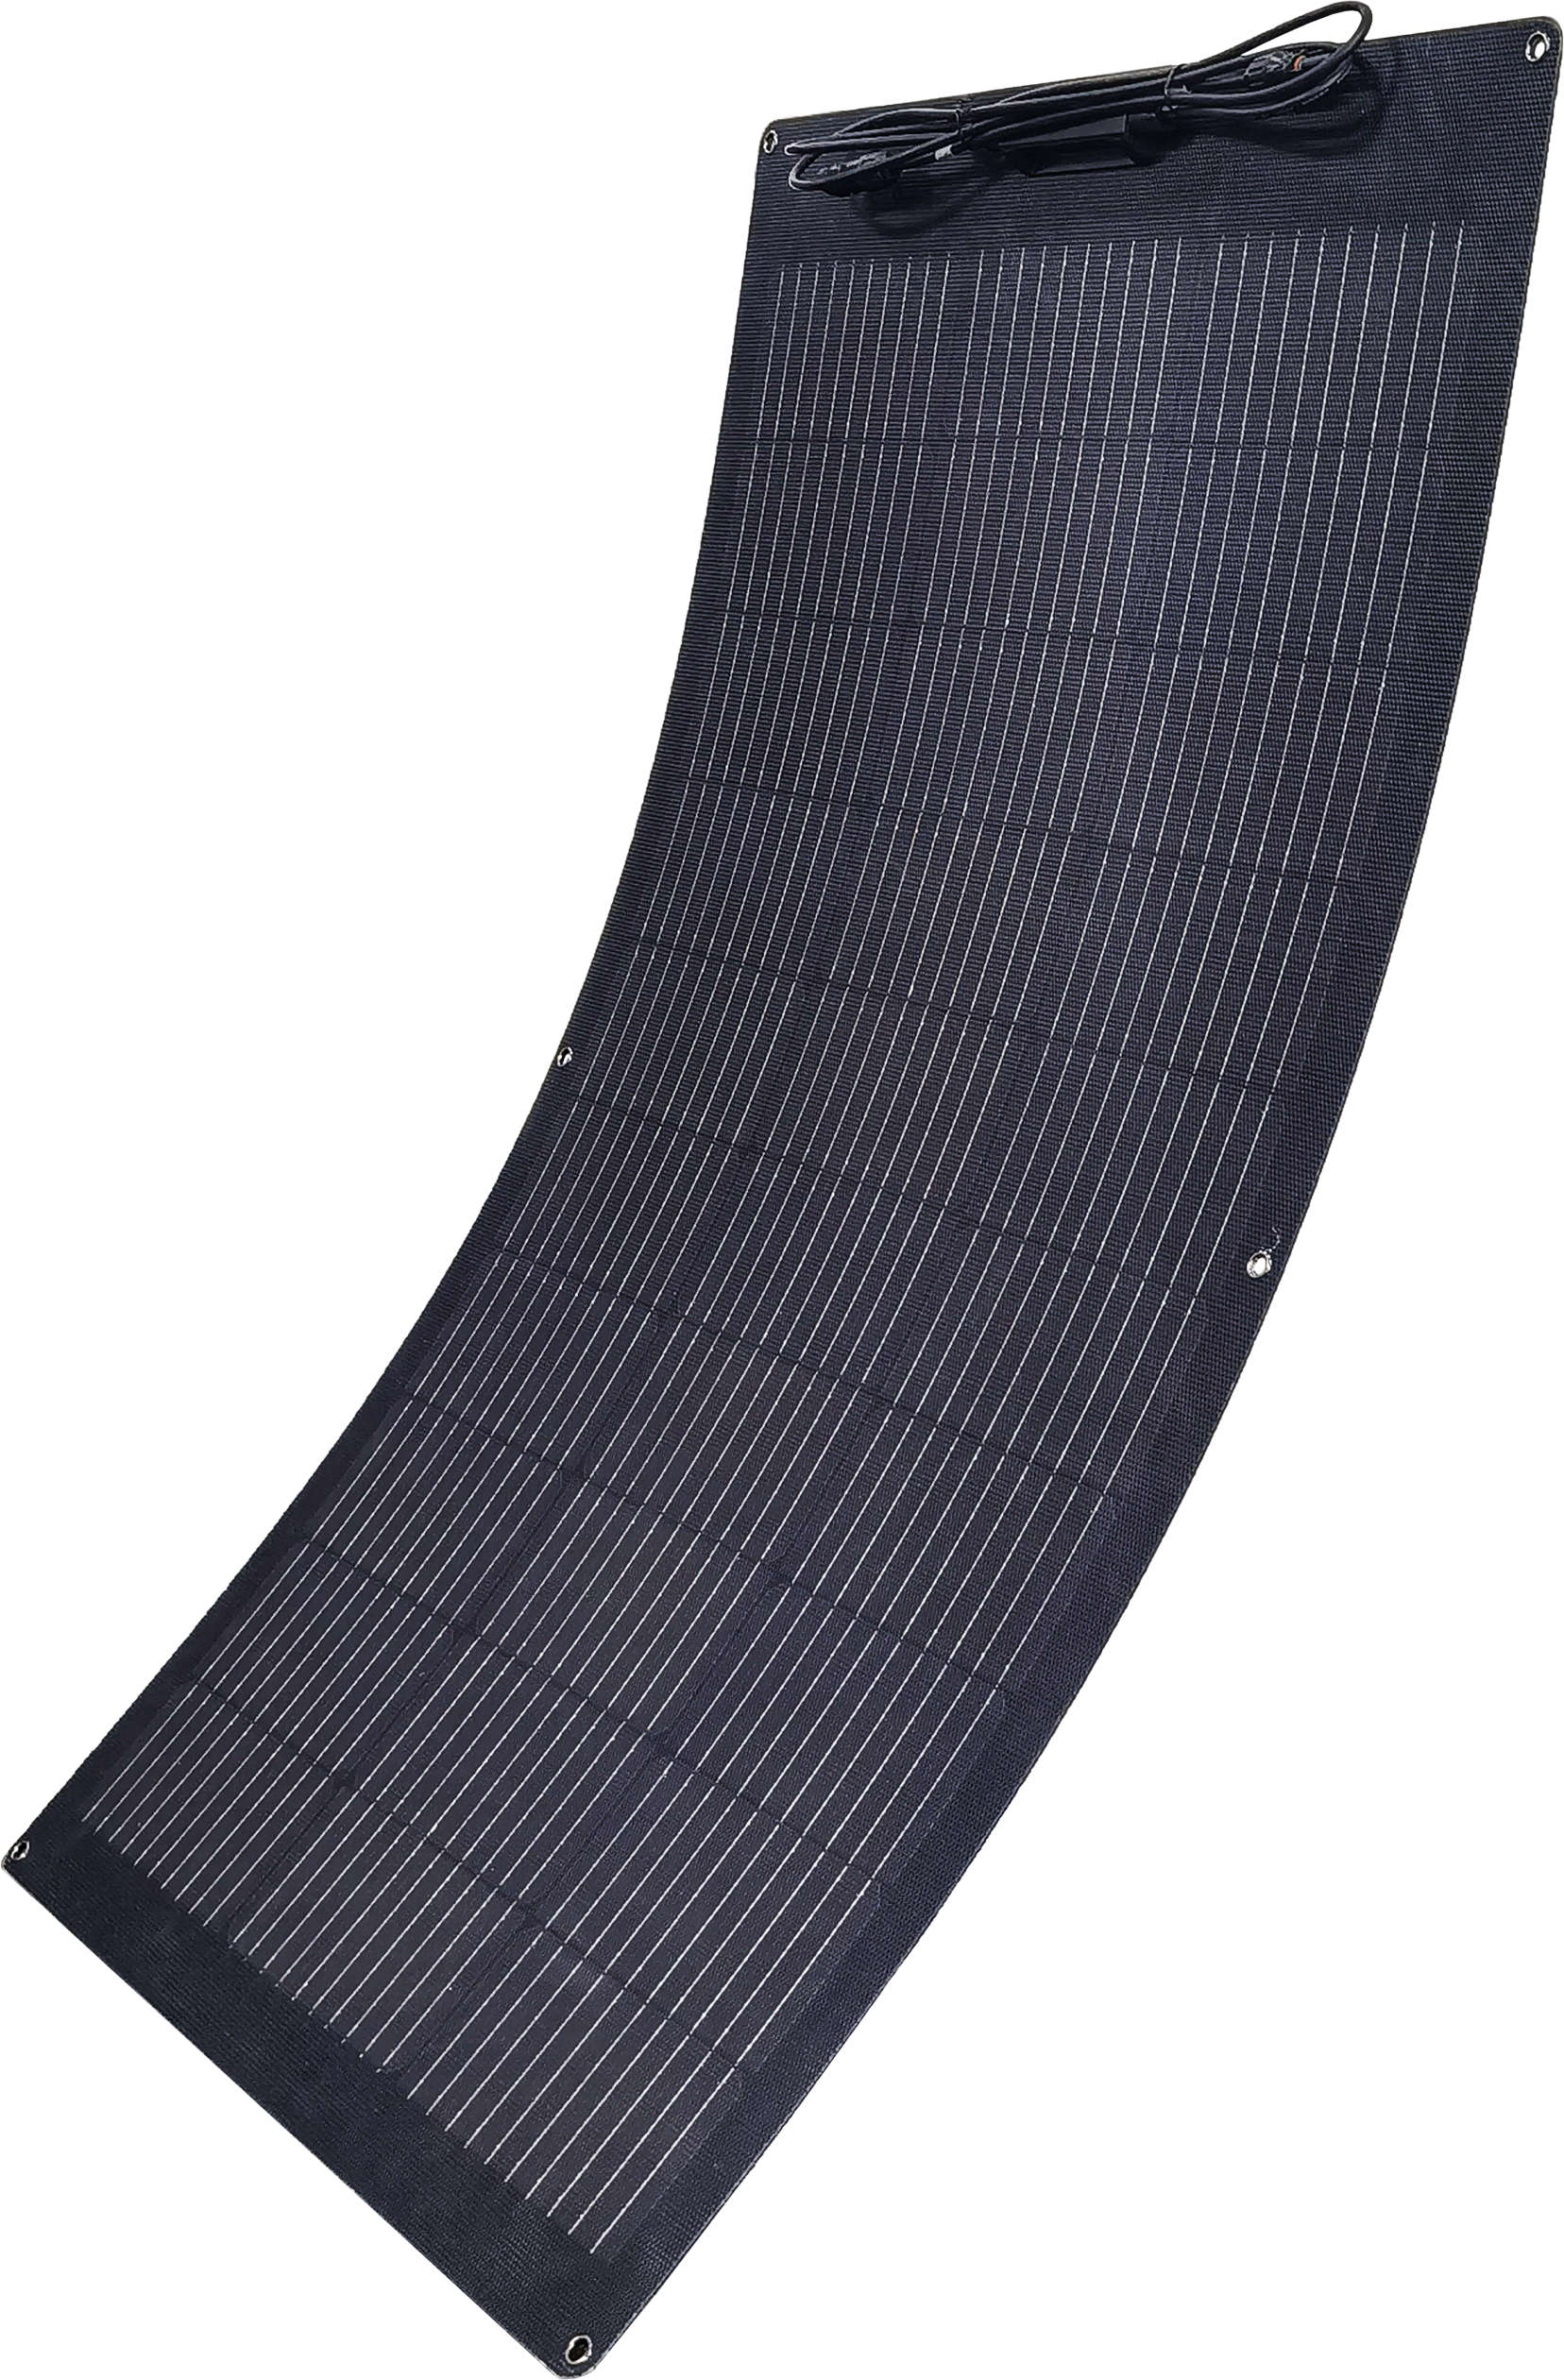 POWERWIN PWS100F Flexible Solar Panel